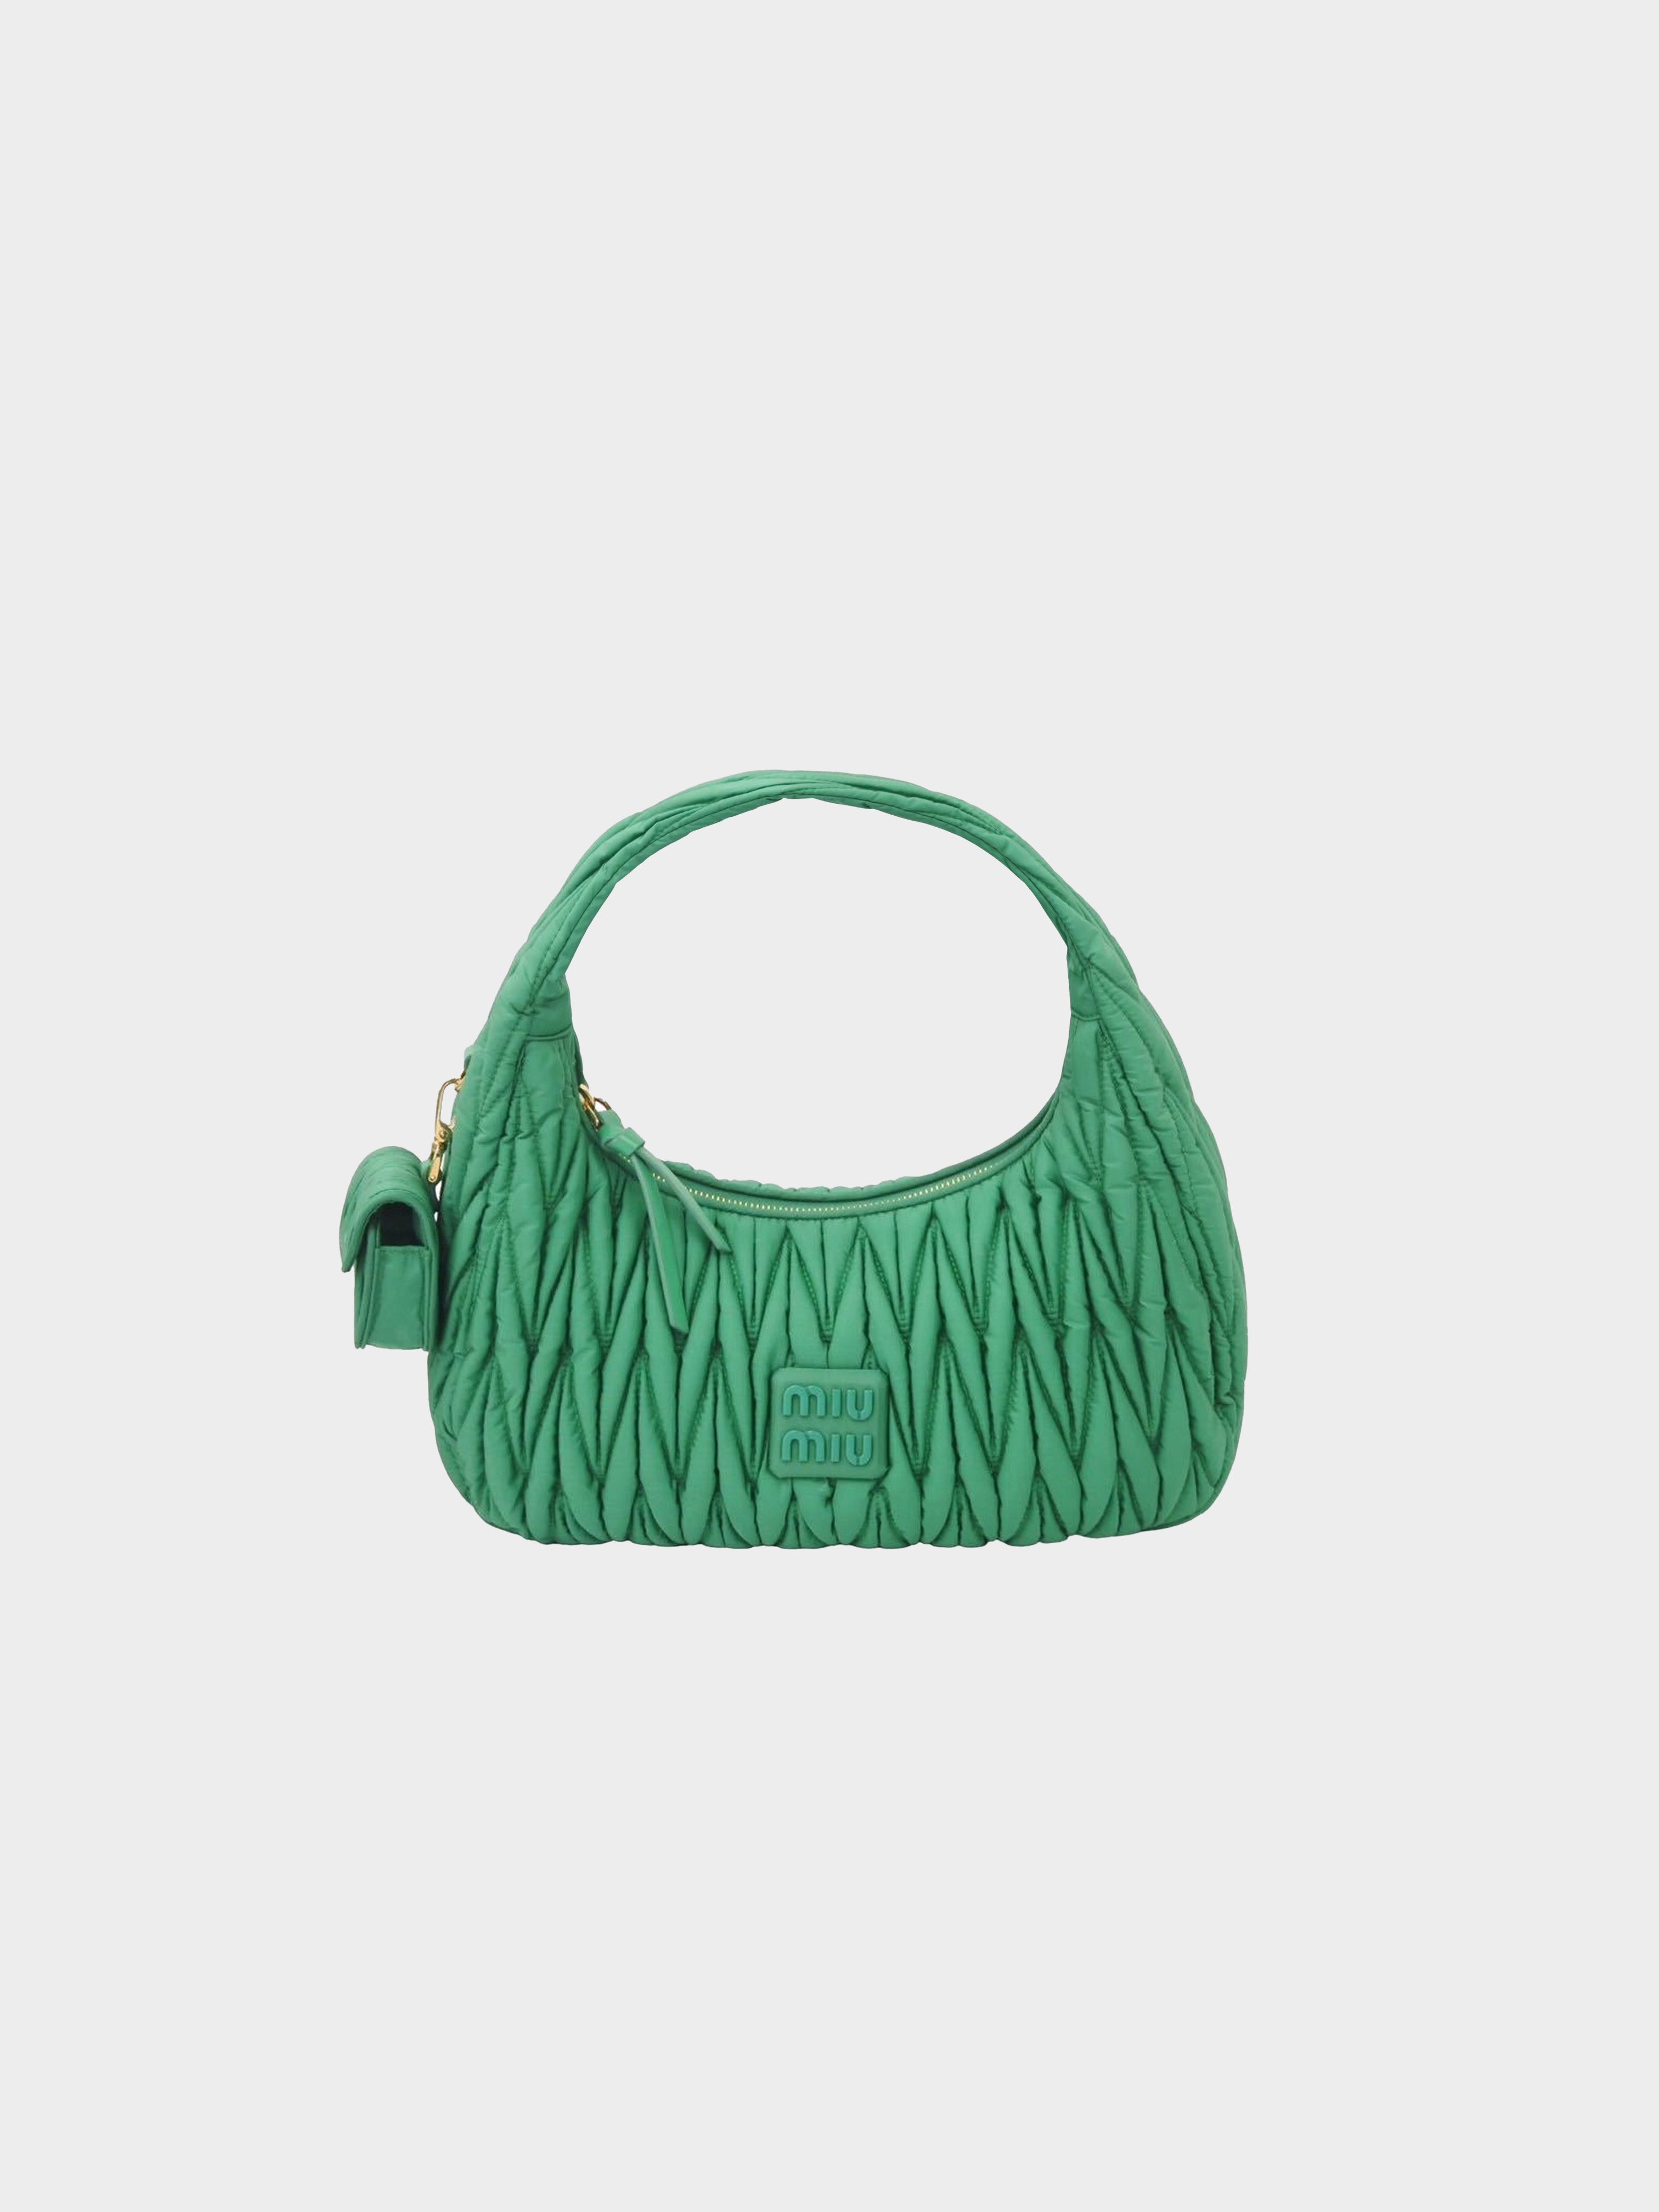 Miu Miu 2020s Green Pleated Re-Nylon Bag